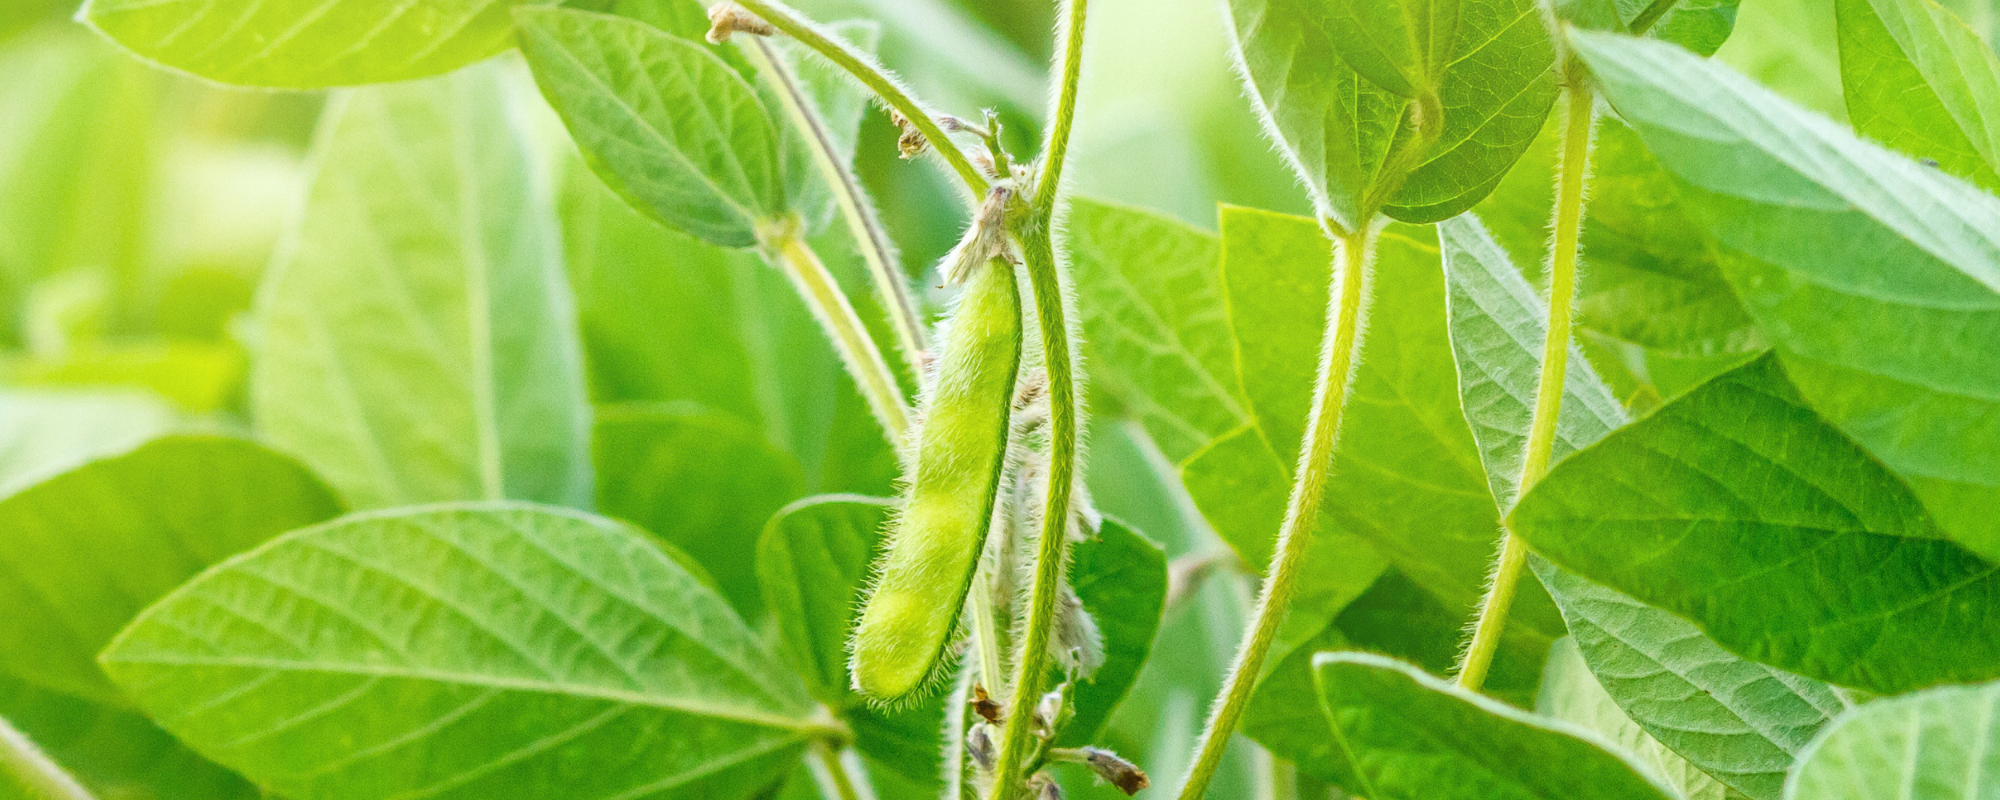  Soybean fertilization